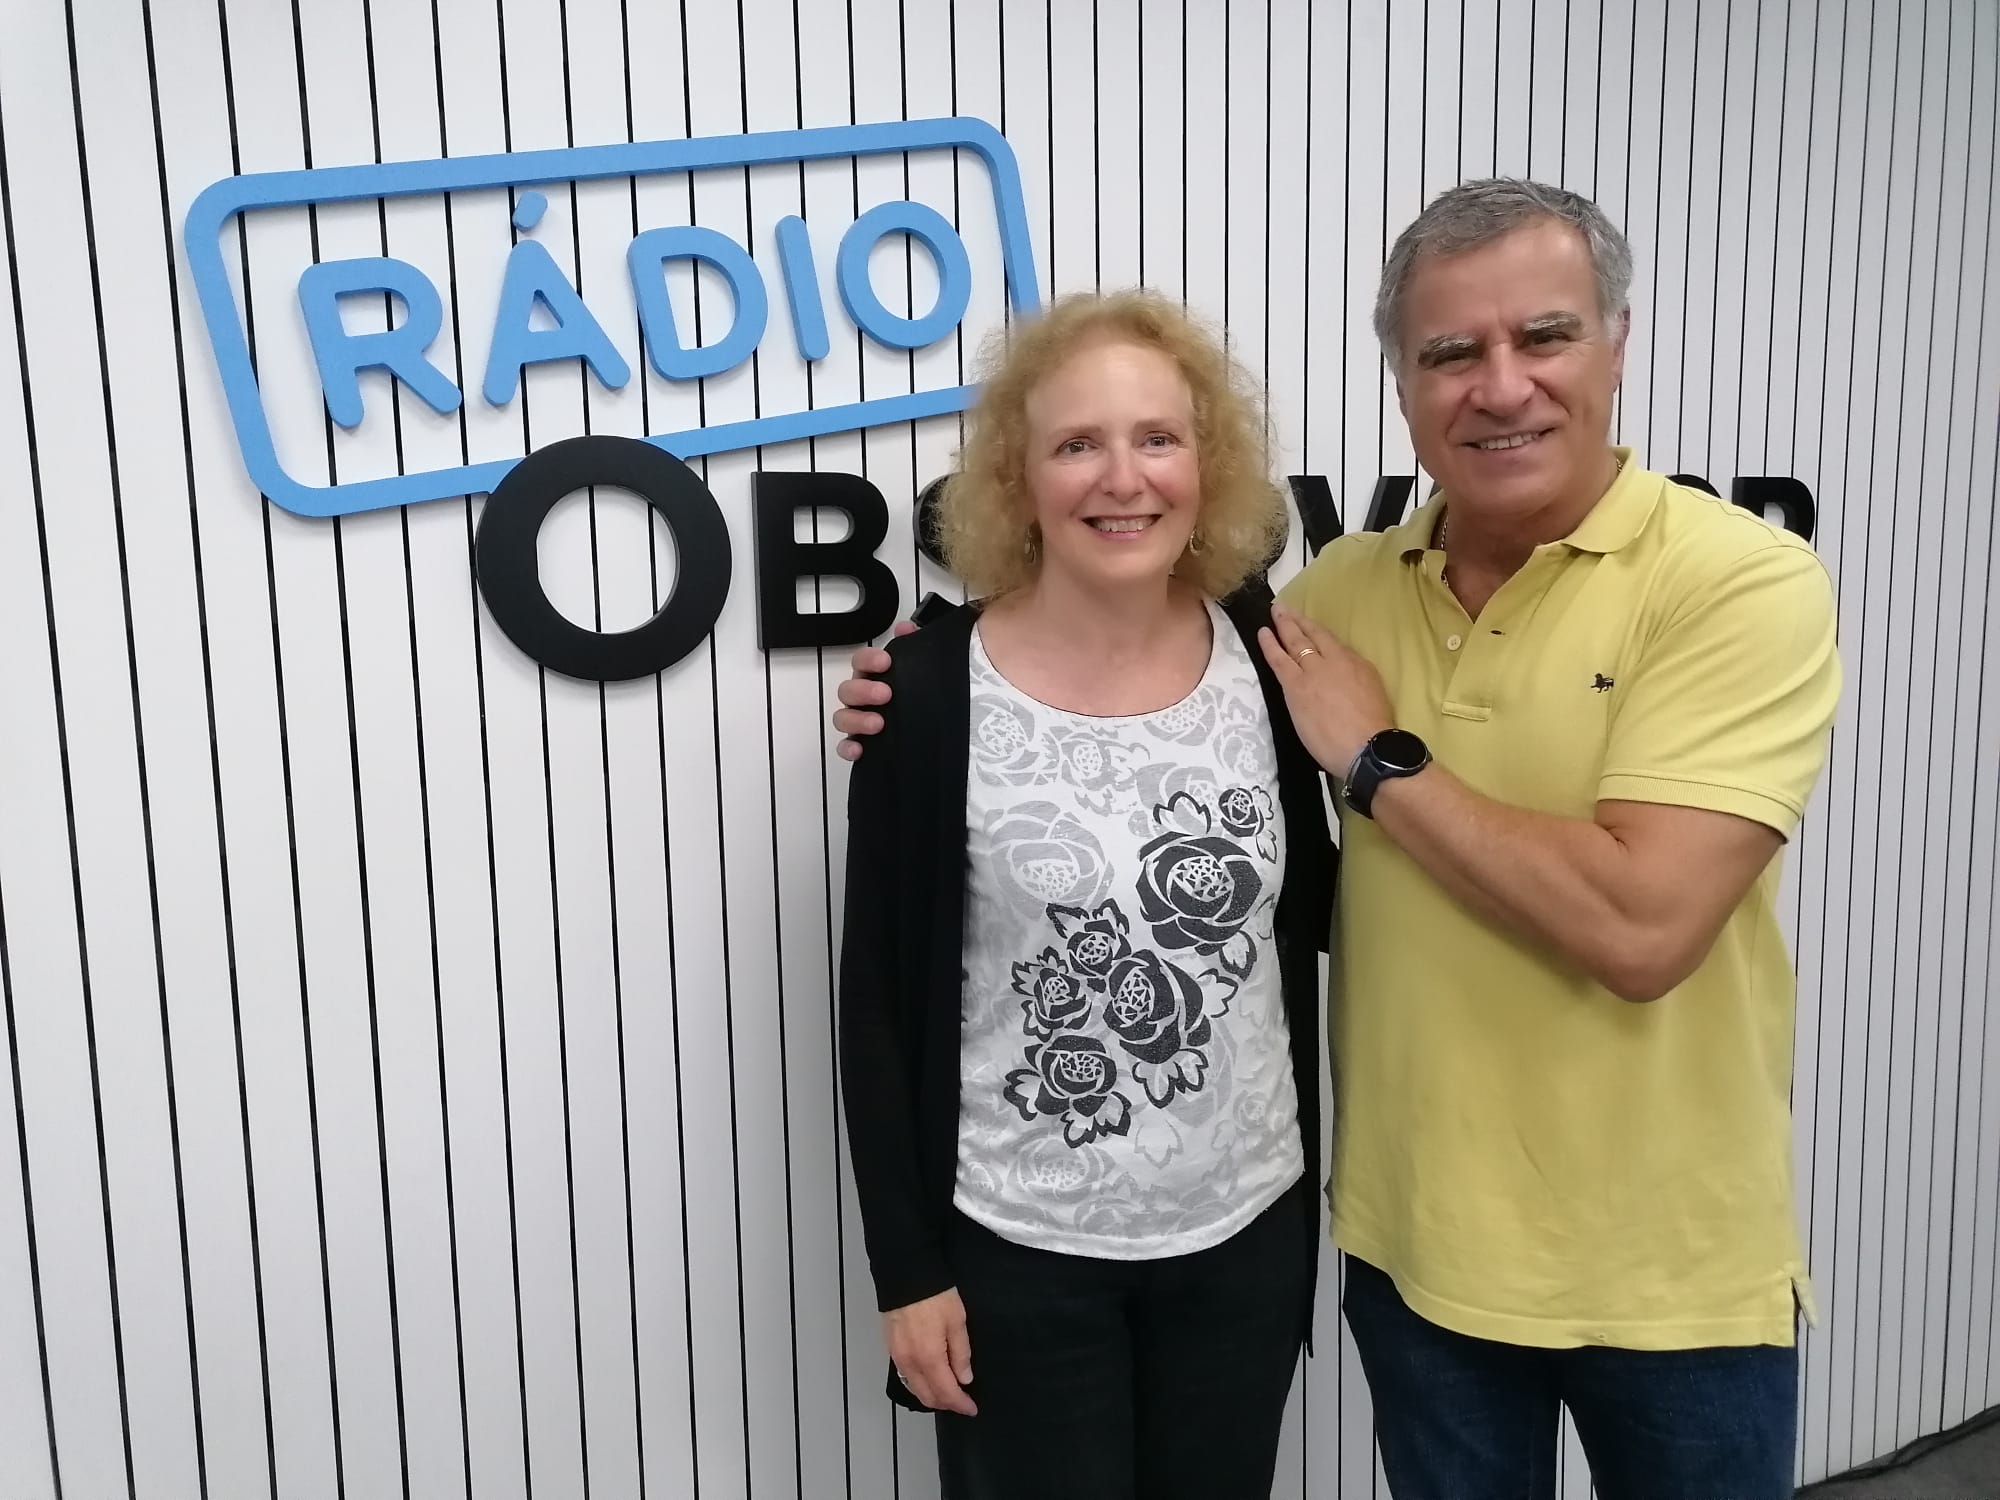 Radio Observador "Convidado Extra" interview with João Paulo Sacadura - image